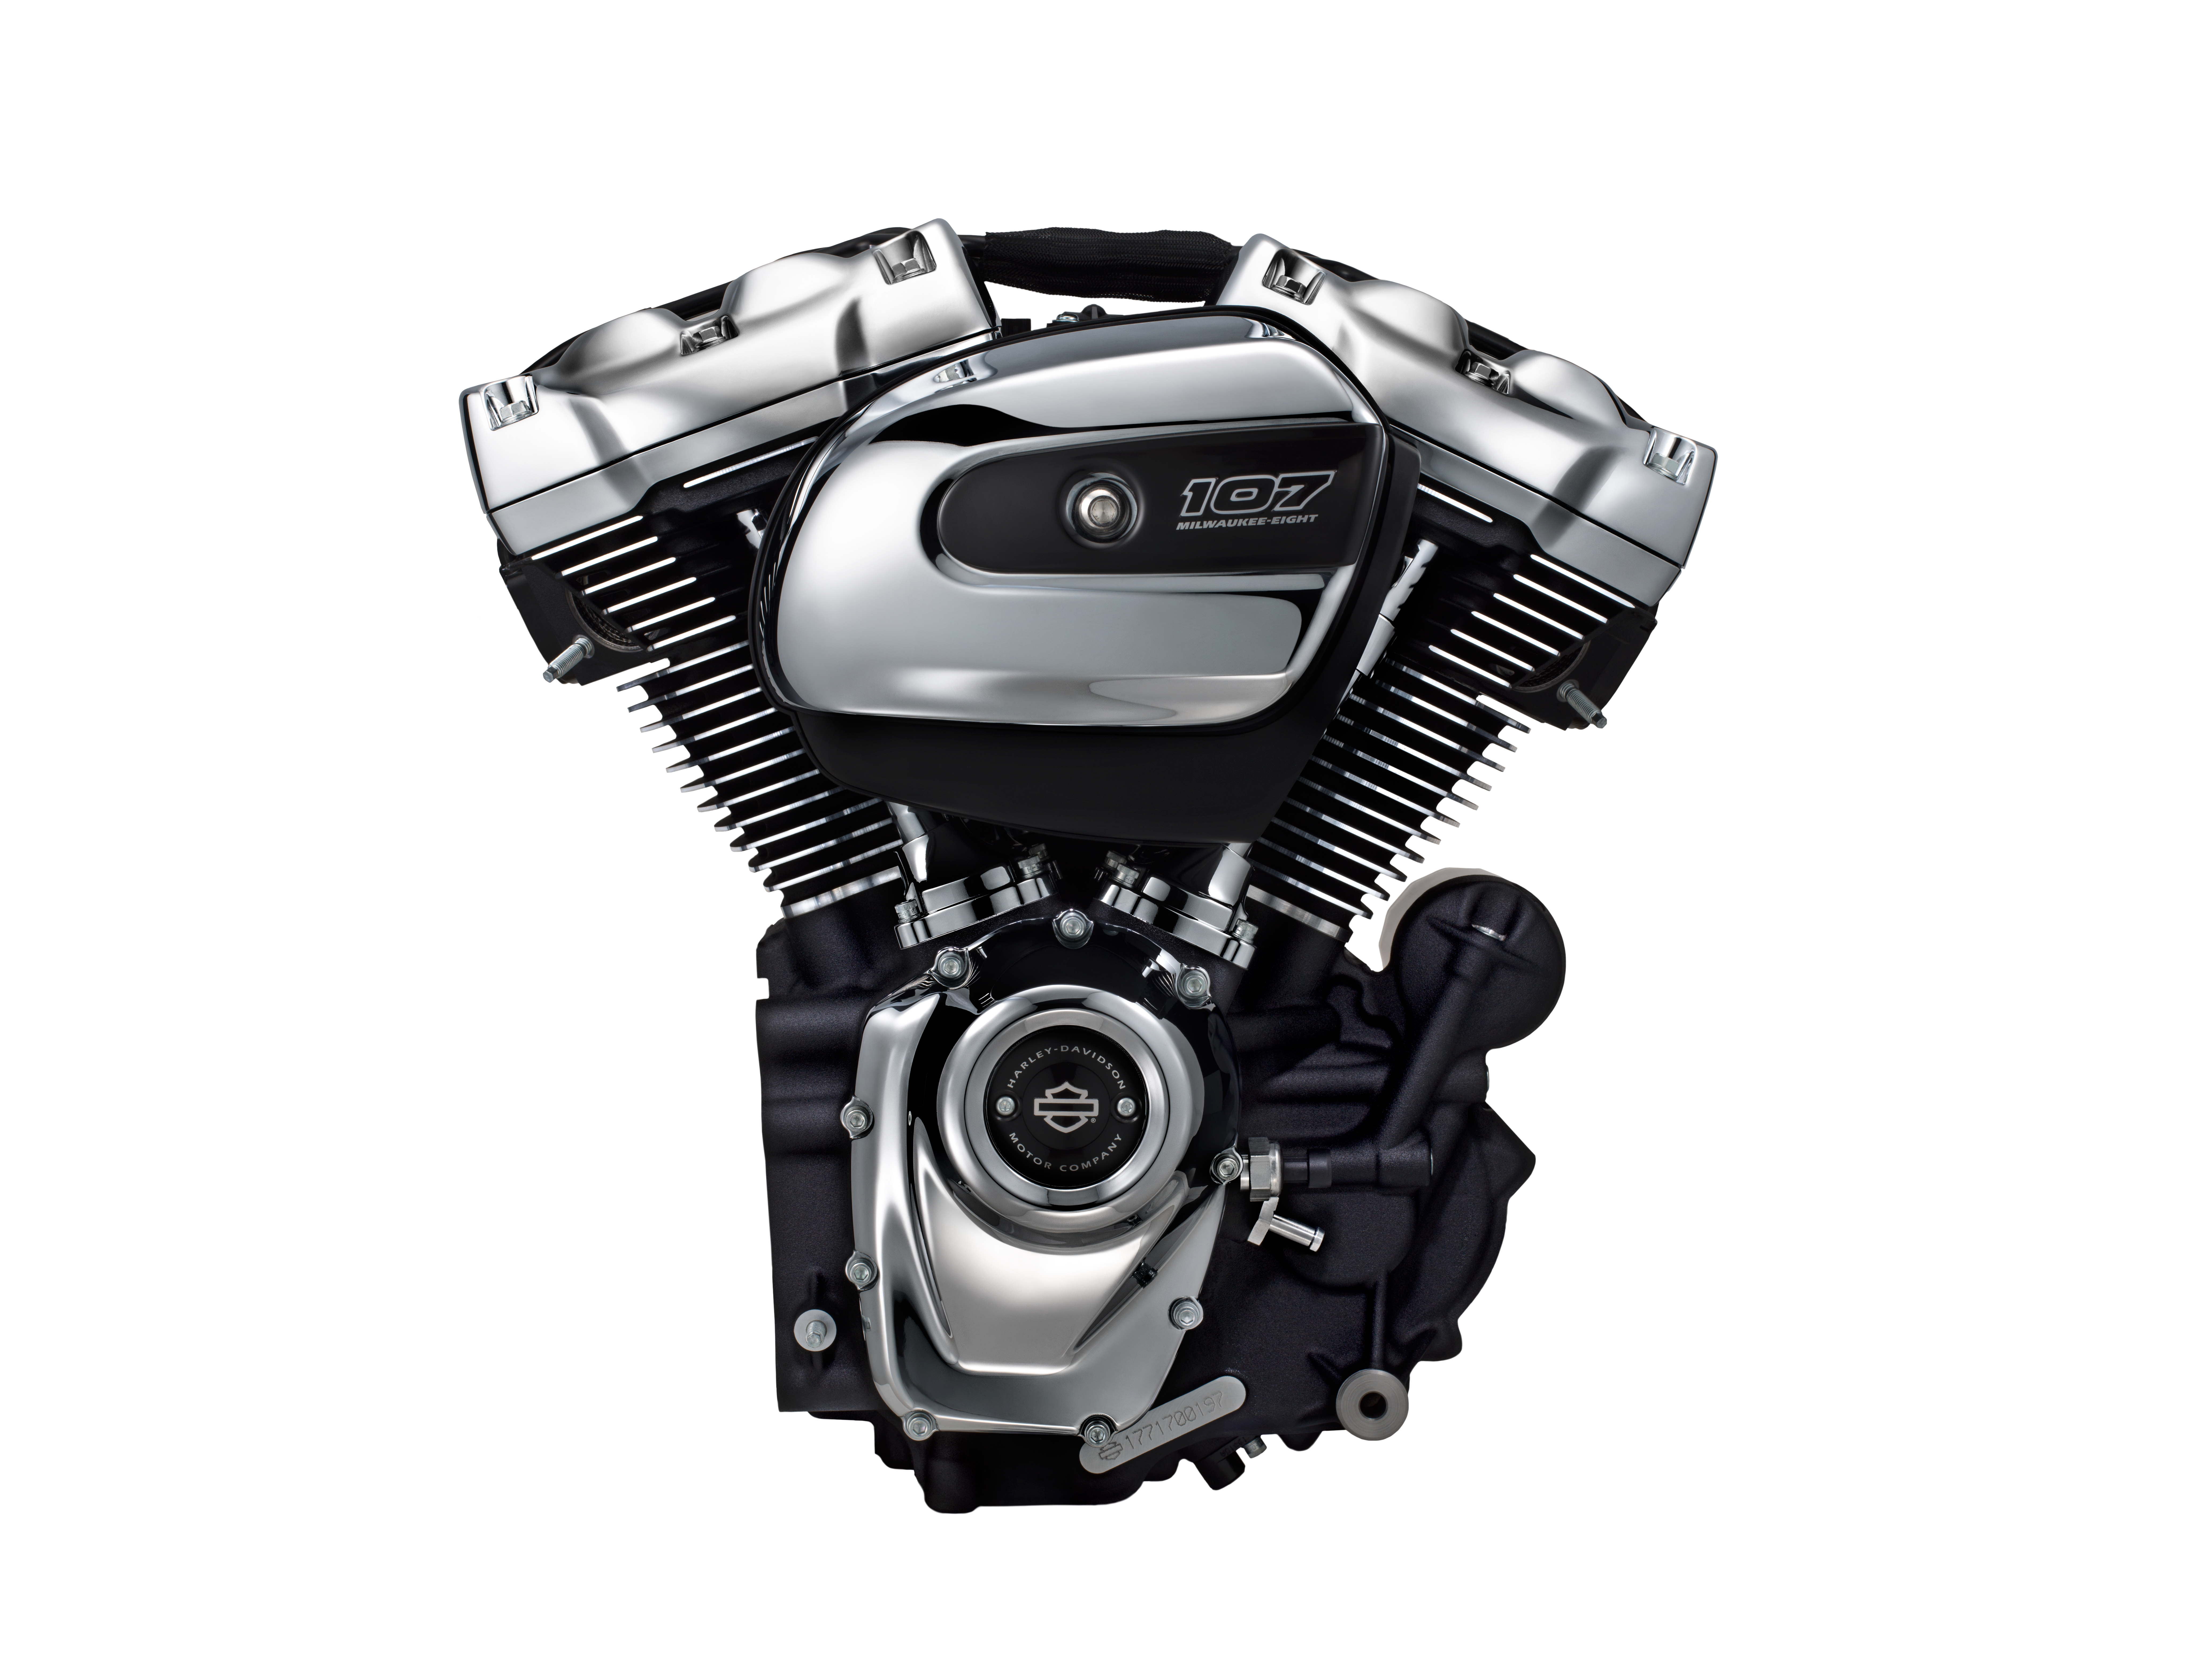 Harley Davidson S New Engine Motorcycle Cruiser